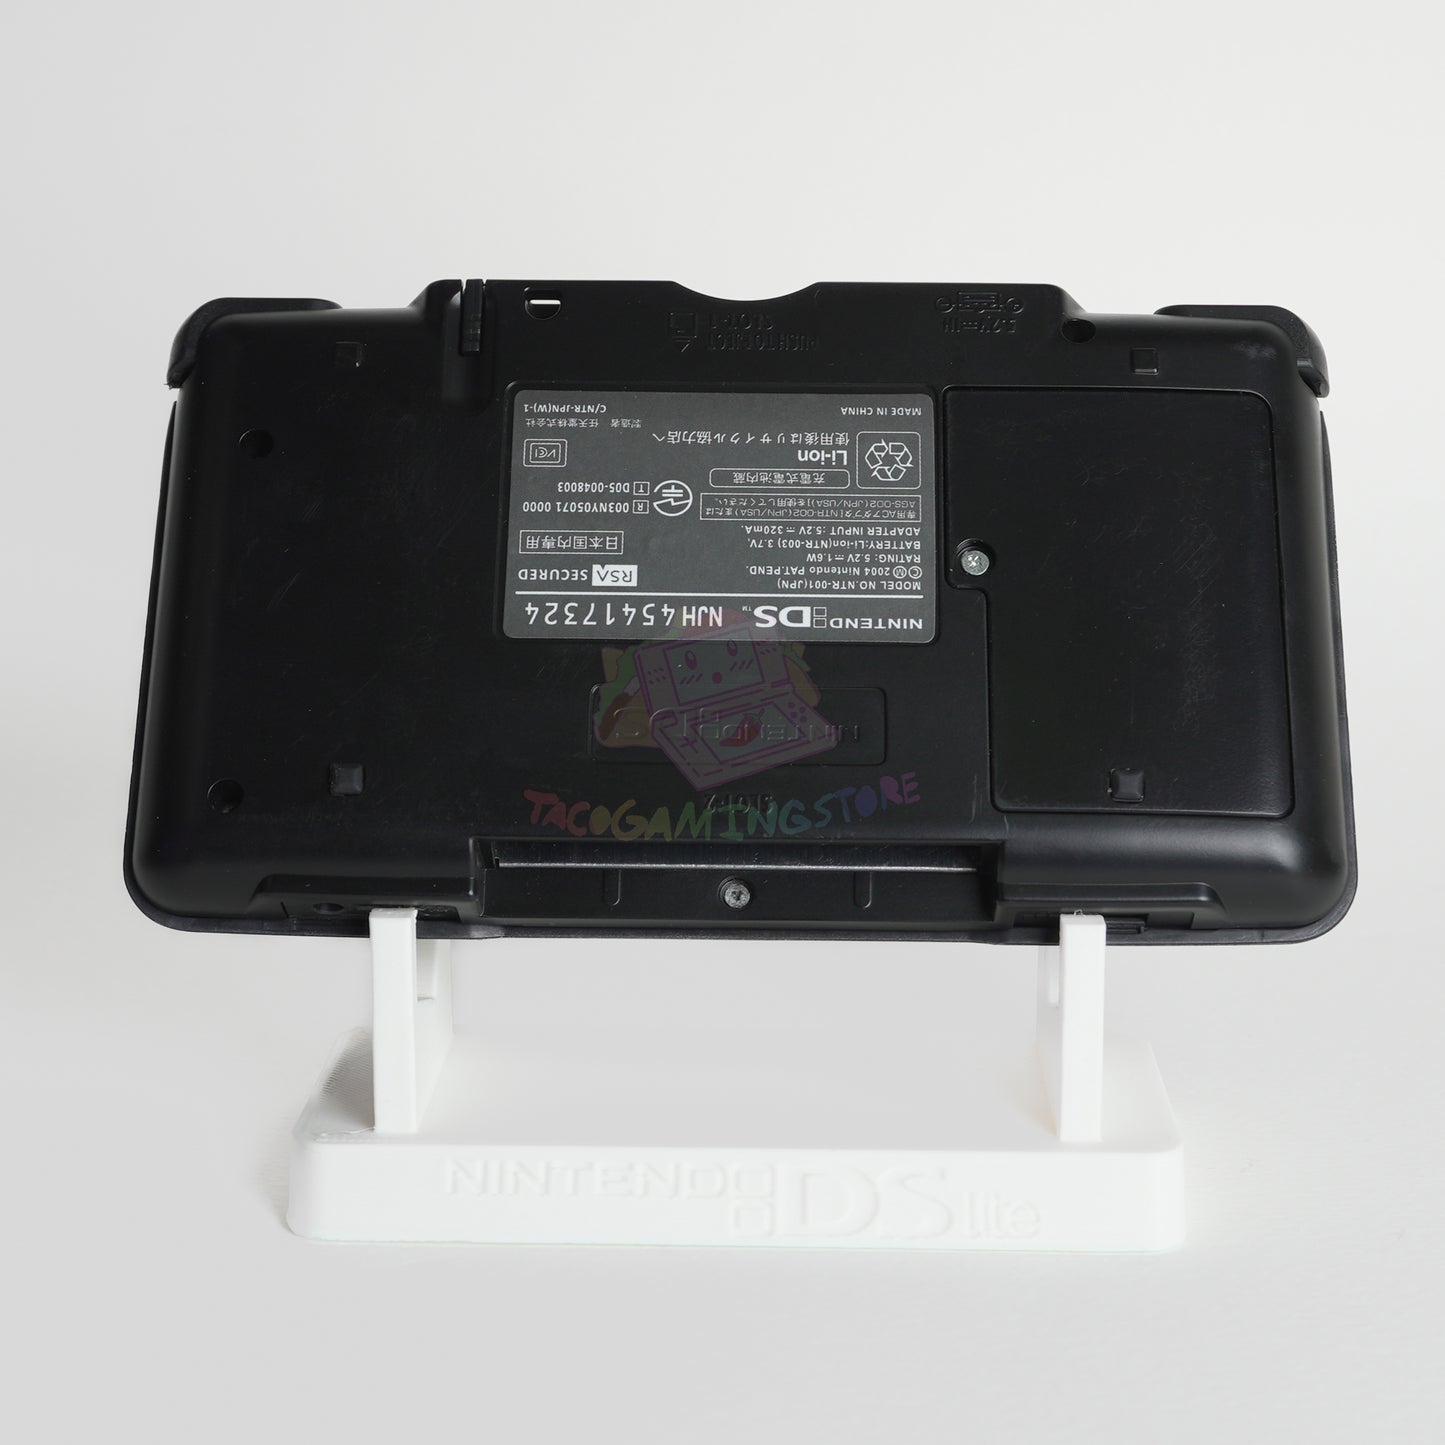 Nintendo DS Launch Edition Graphite Black Handheld System (FATDS)